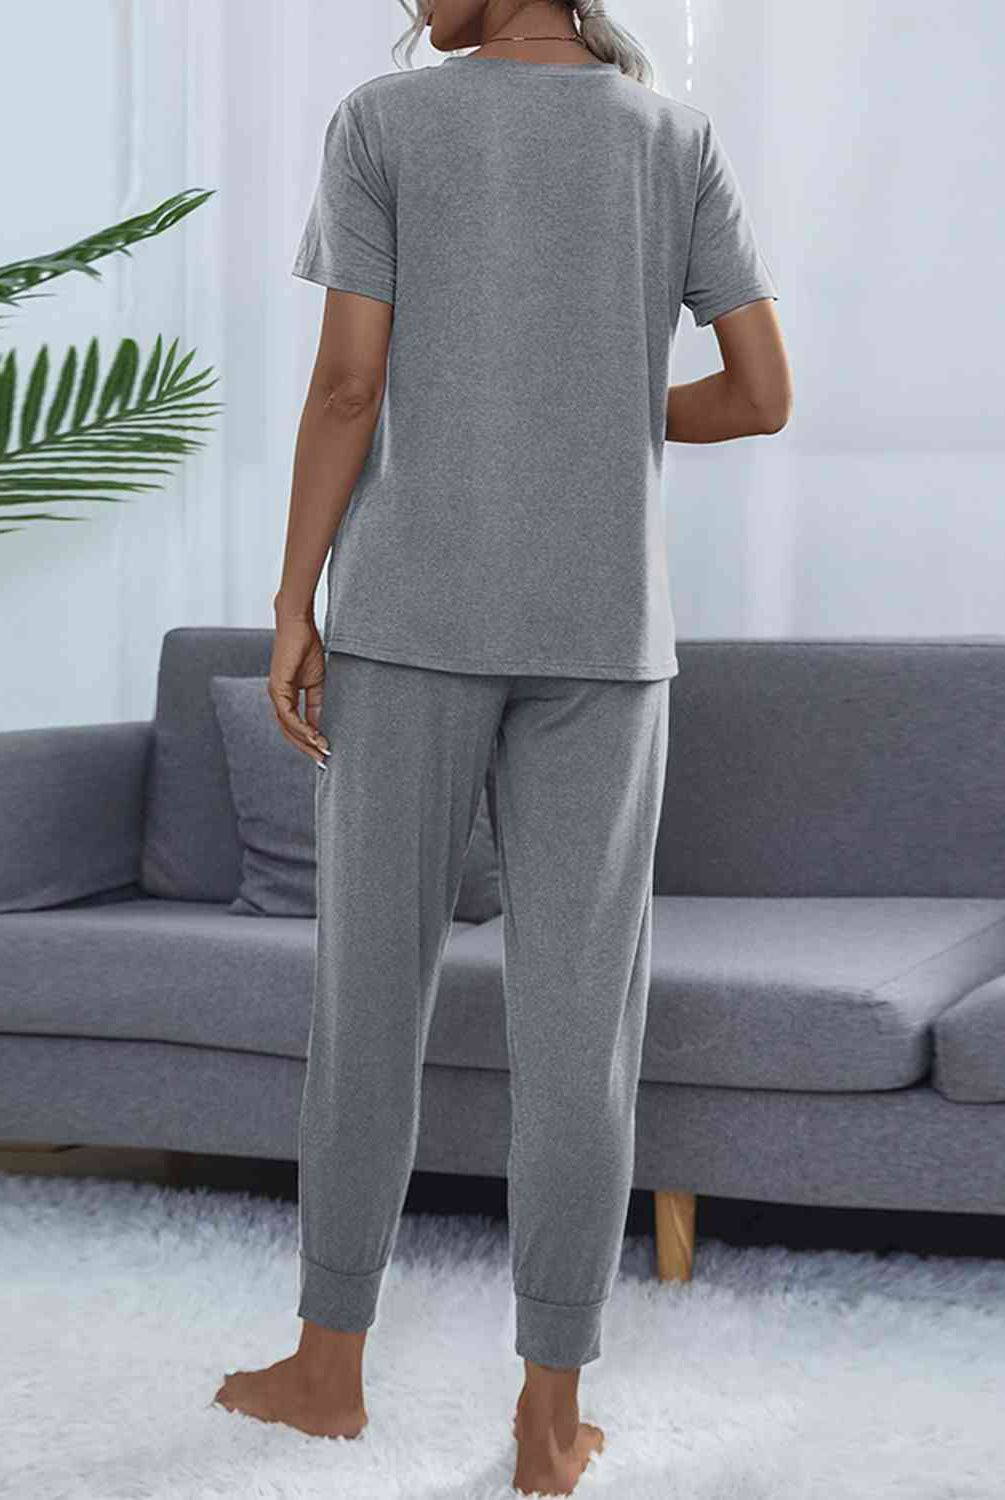 Dim Gray Round Neck Short Sleeve Top and Pants Set Loungewear